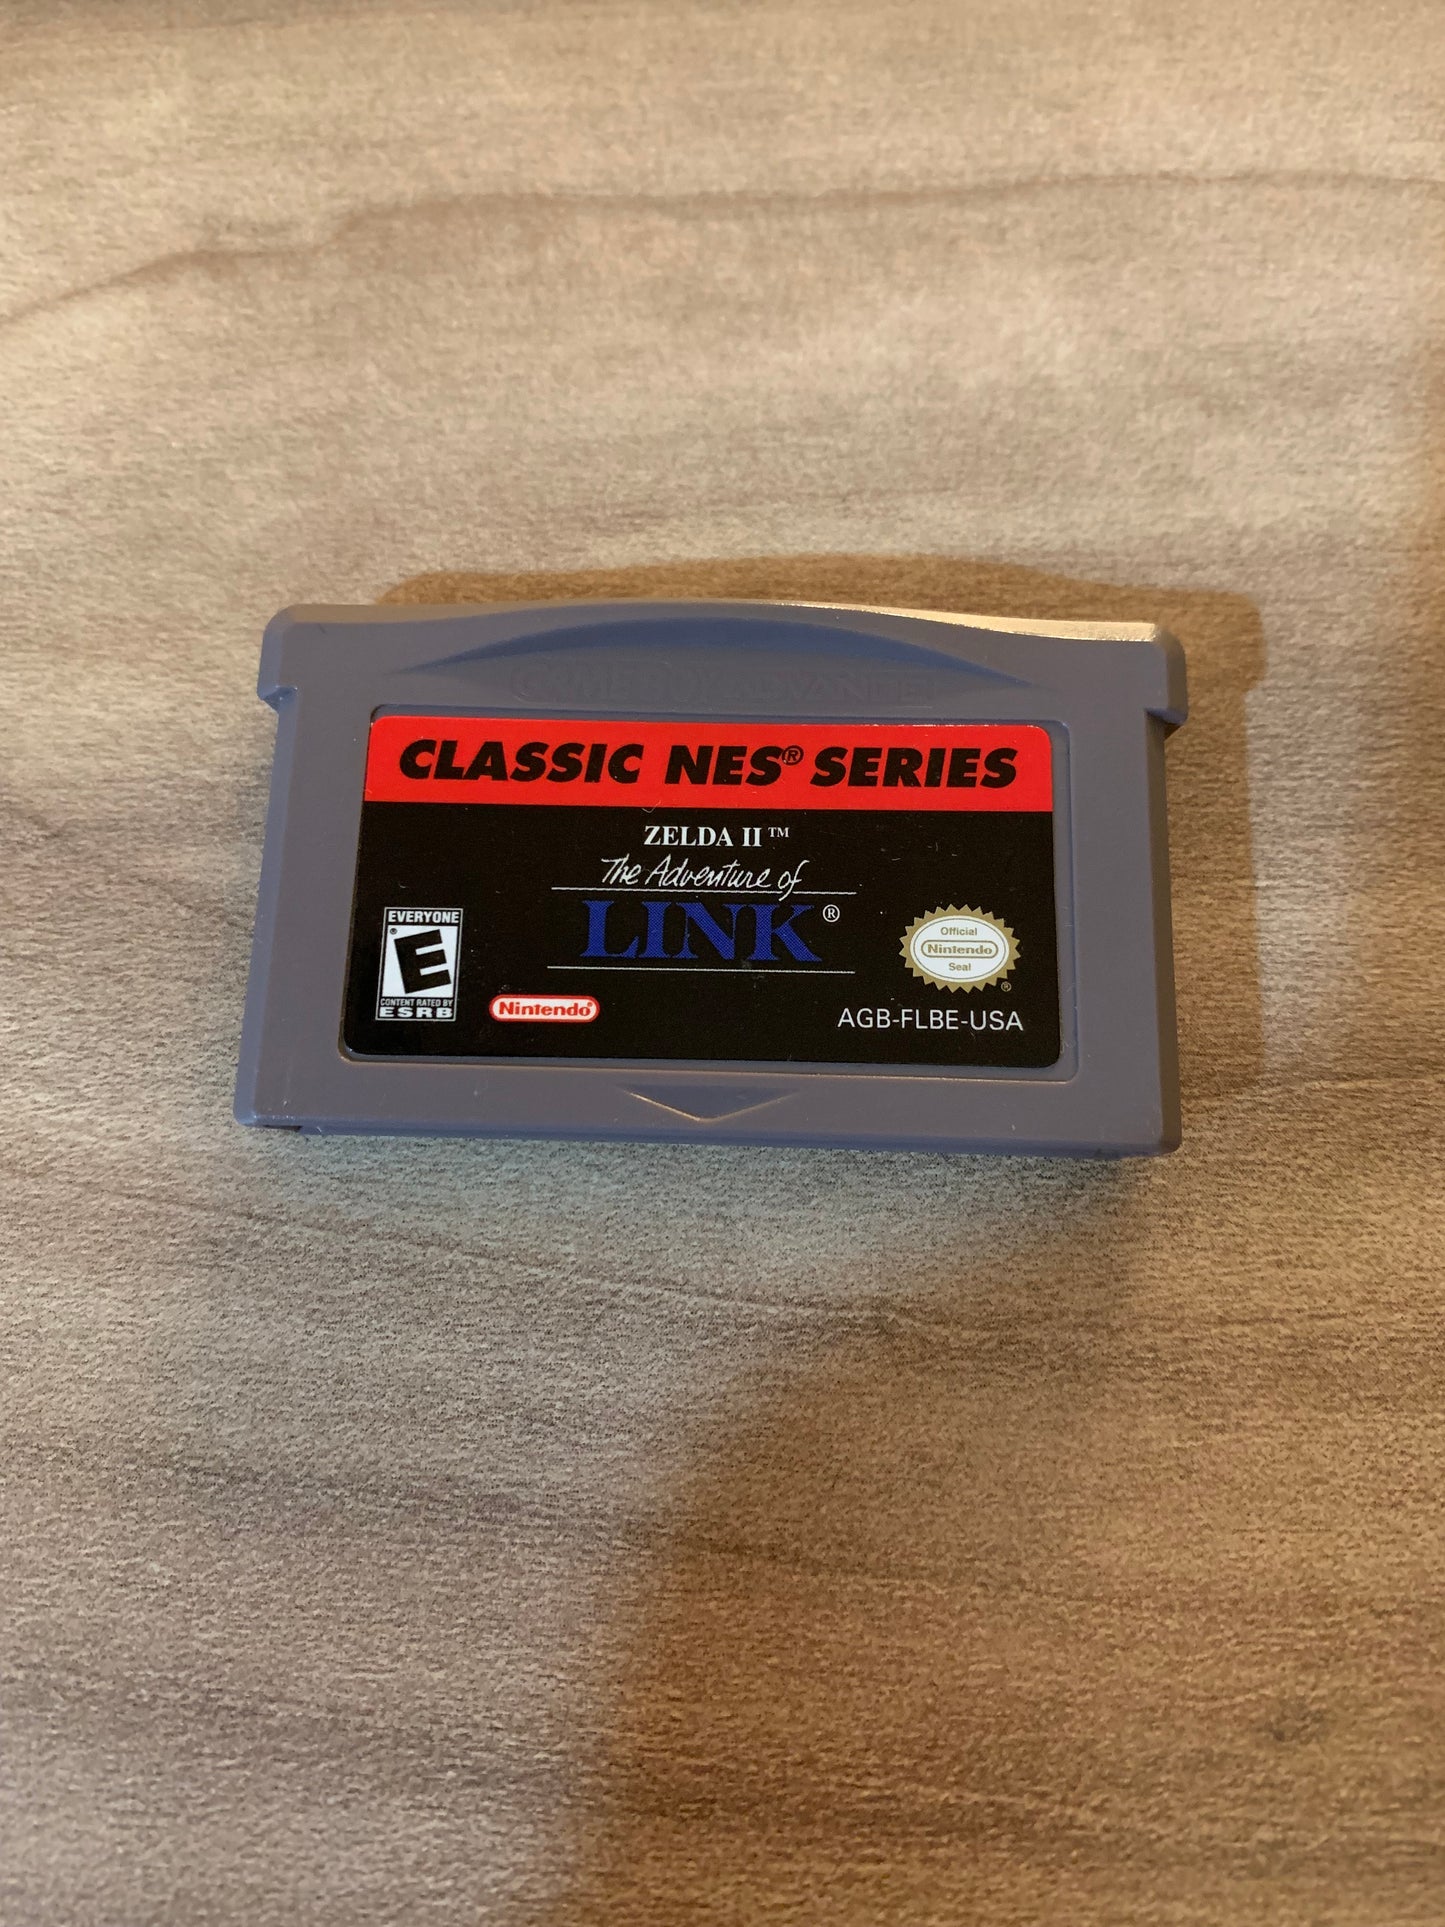 PiXEL-RETRO.COM : GAME BOY ADVANCE (GBA) NTSC ZELDA II THE ADVENTURE OF LINK CLASSIC NES SERIES